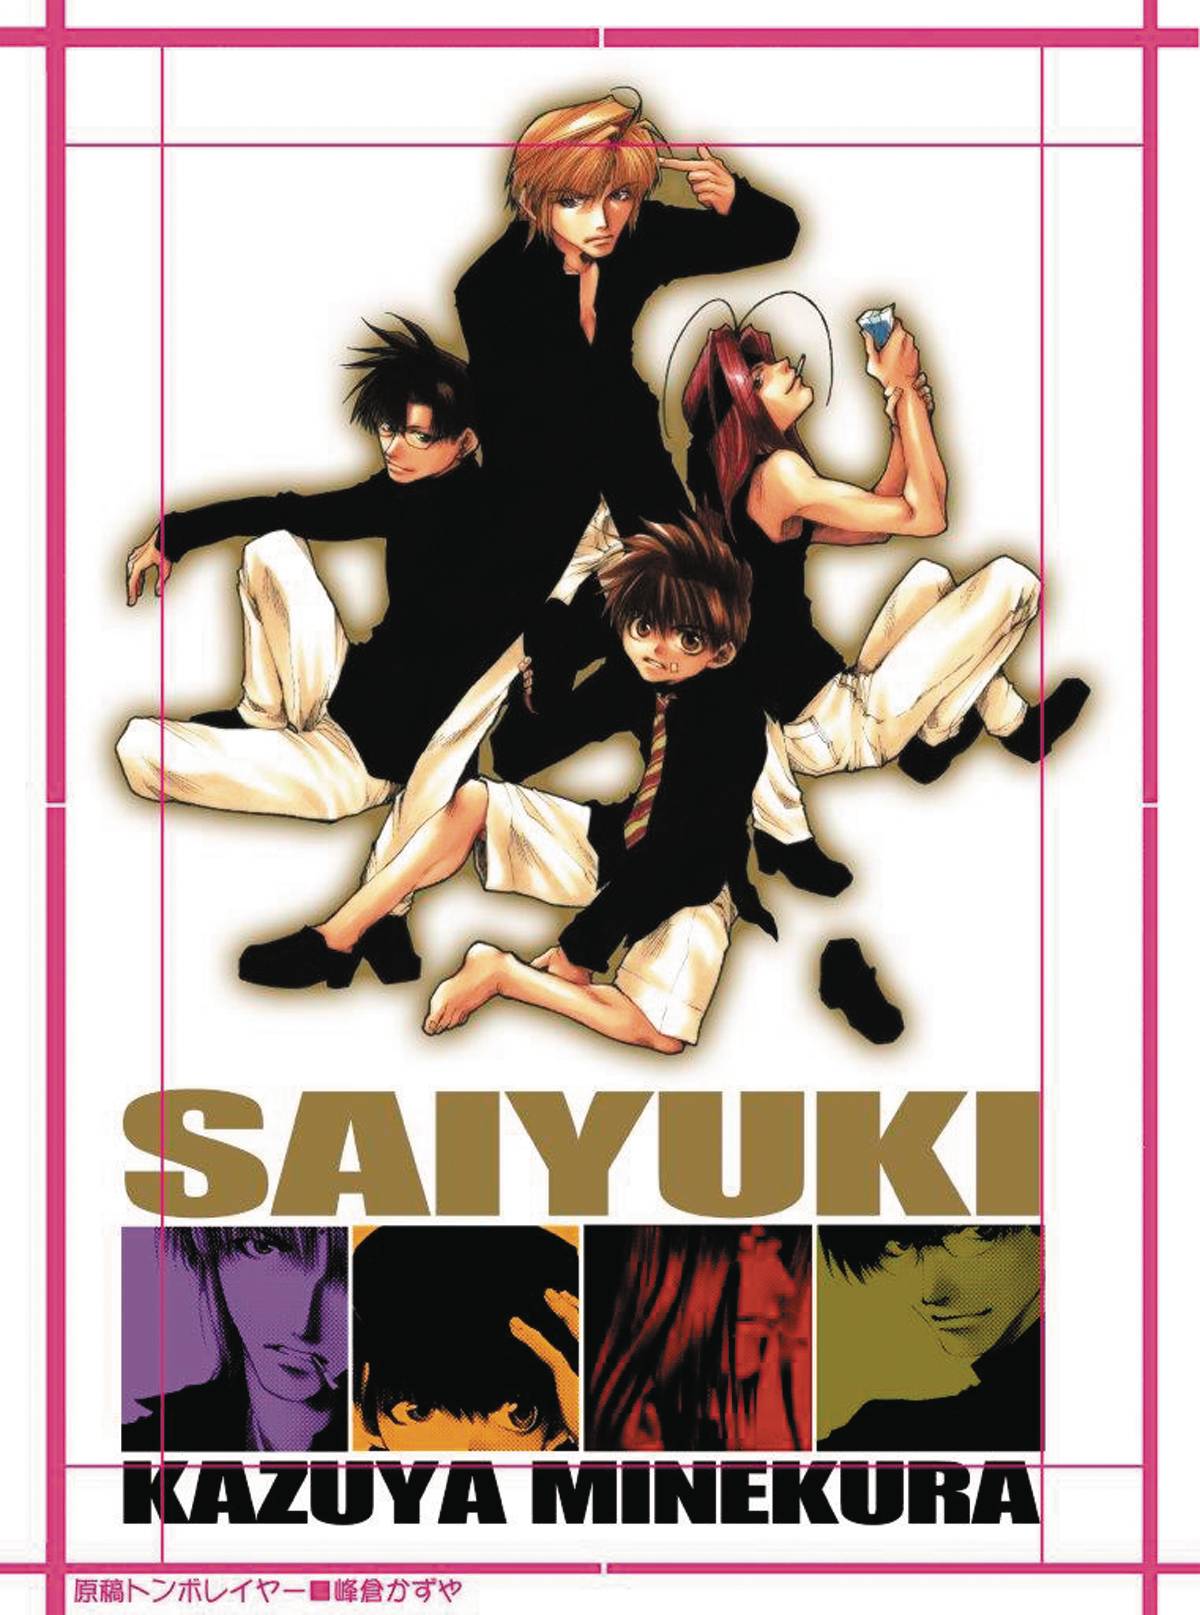 Saiyuki Original Series Resurrected Hardcover Manga Volume 1